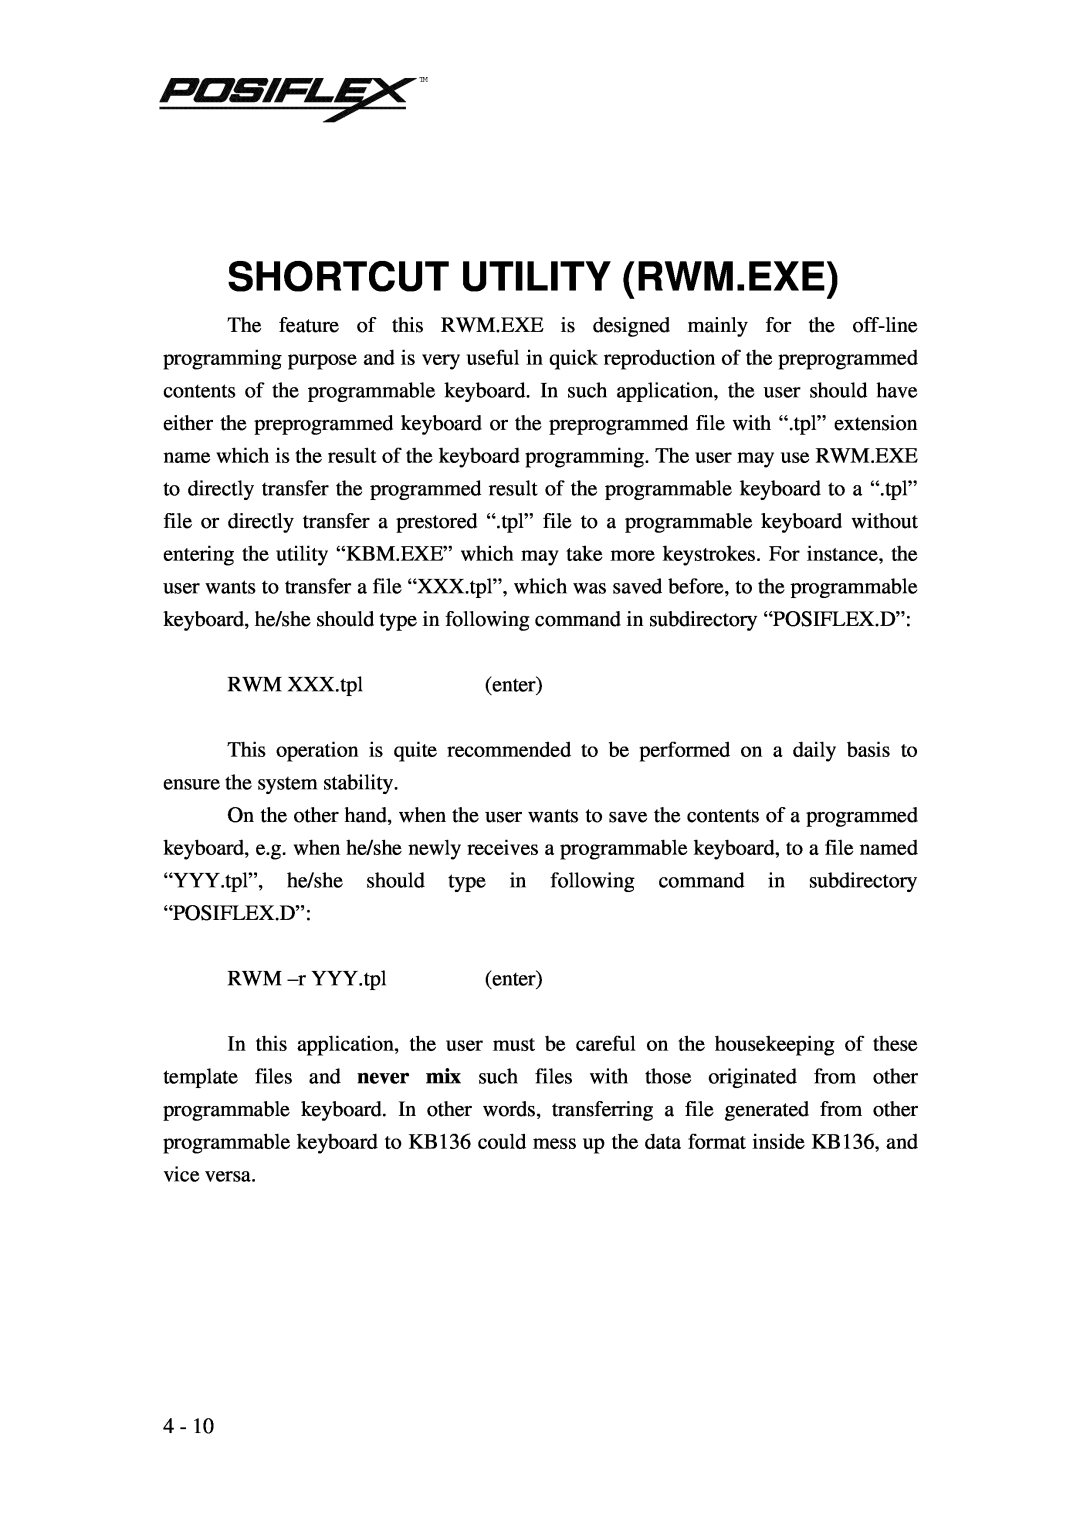 POSIFLEX Business Machines PST KB136 manual Shortcut Utility Rwm.Exe 